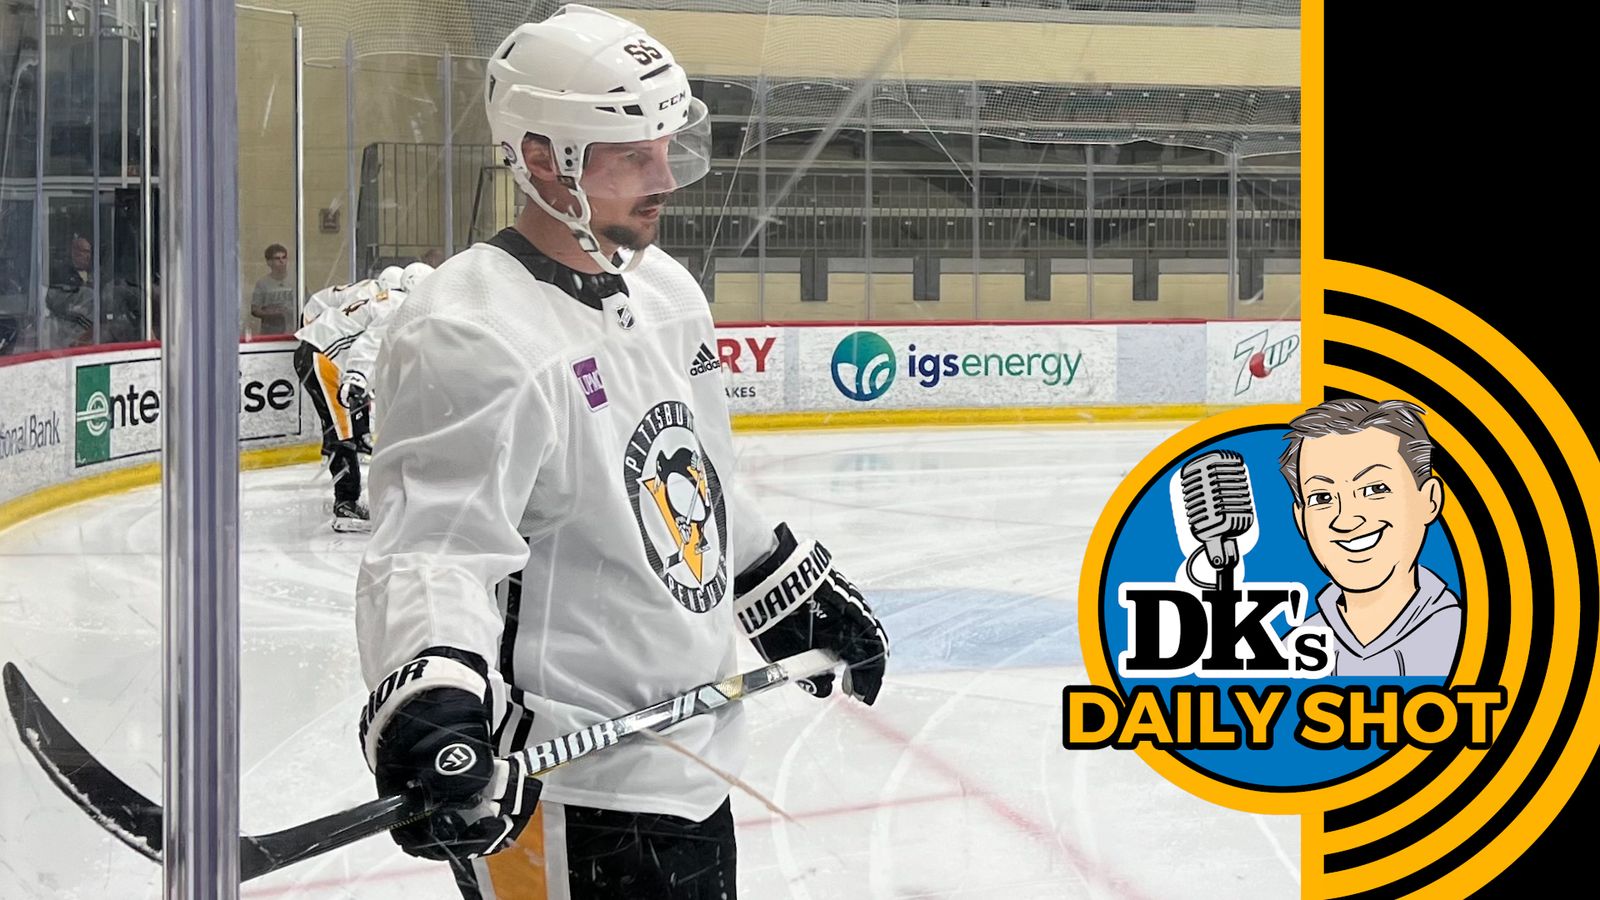 DKs Daily Shot of Penguins Wherell Karlsson fit?